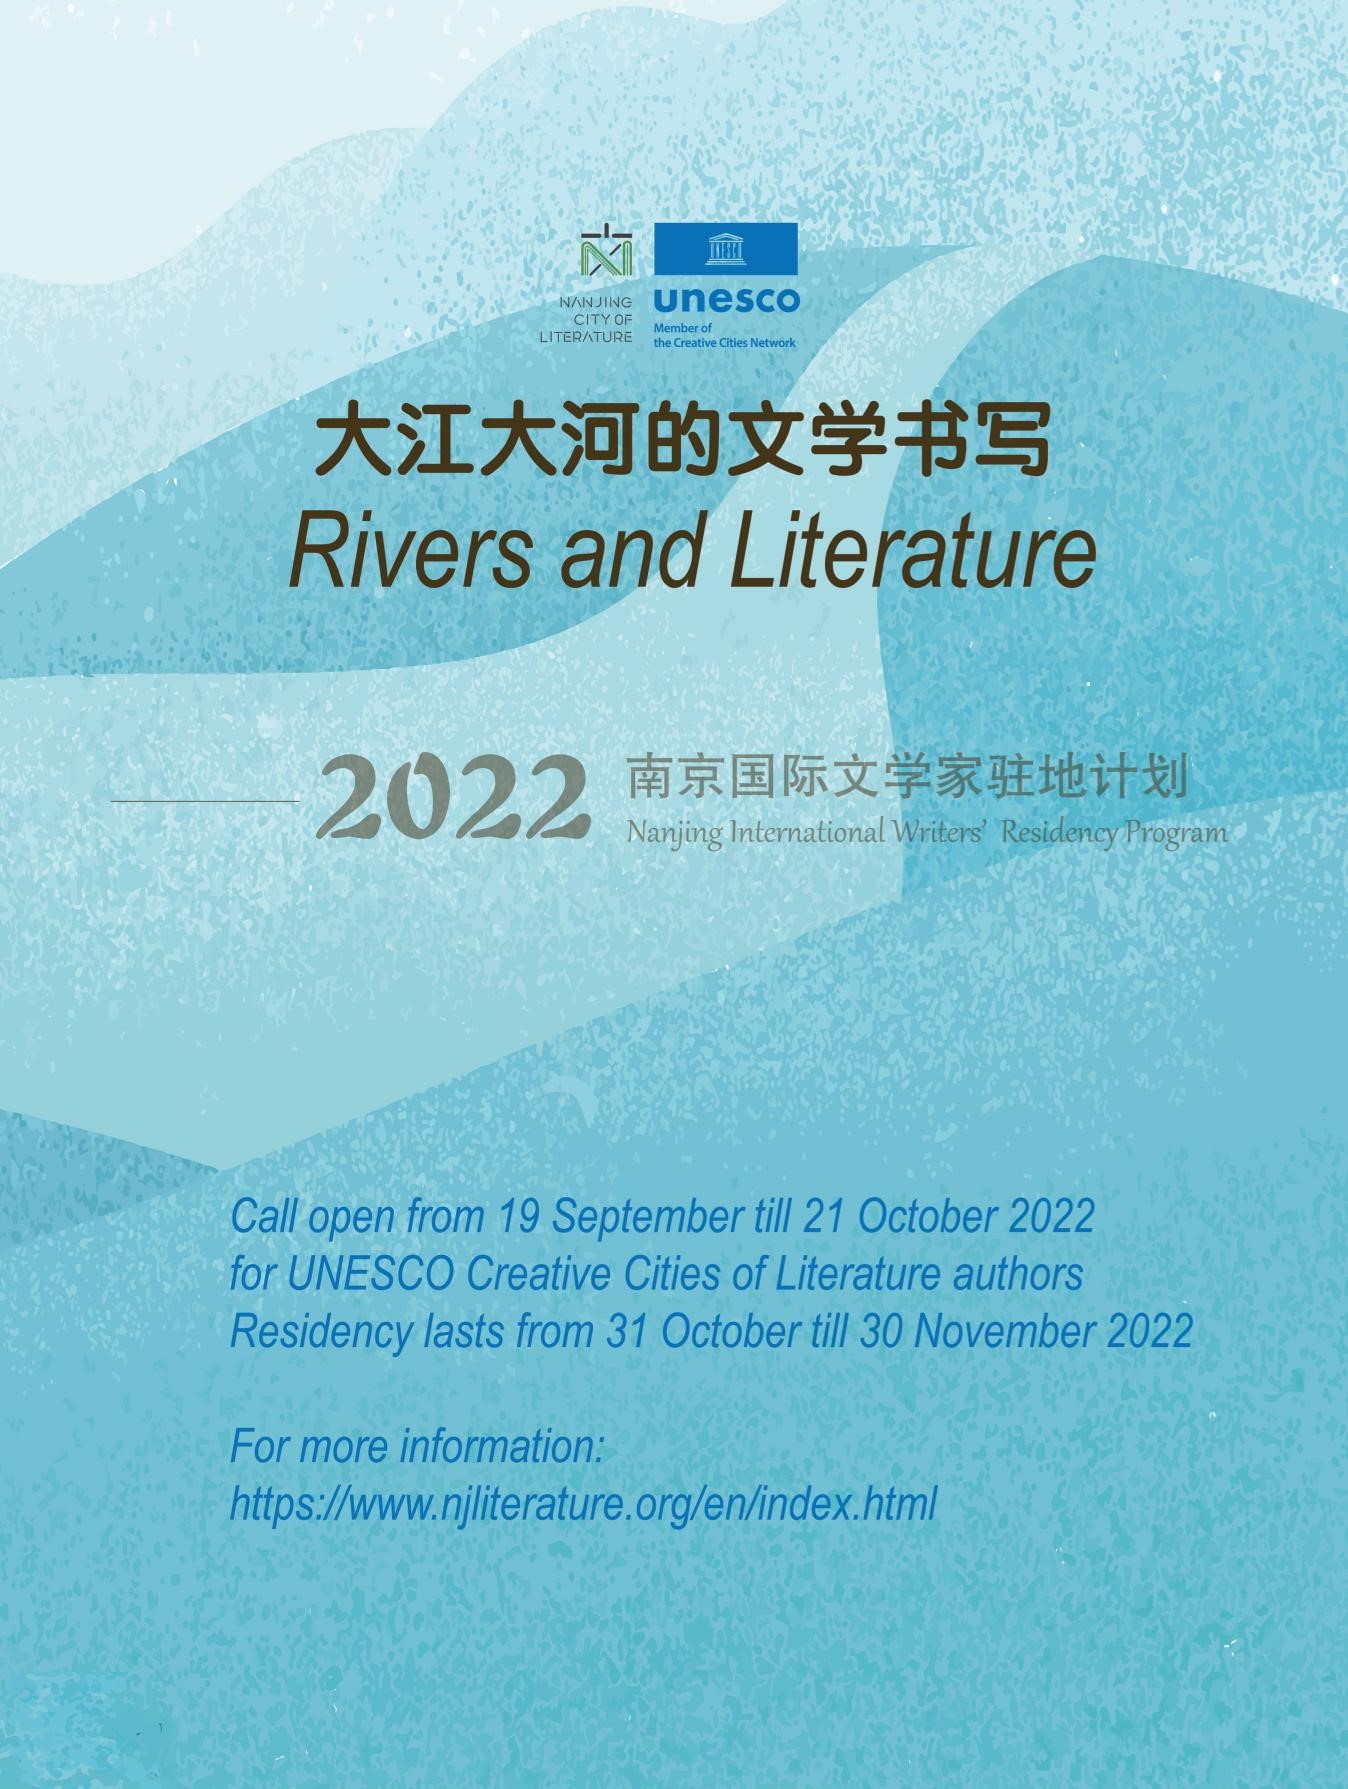 Open Call for Nanjing International Writers Residency 2022